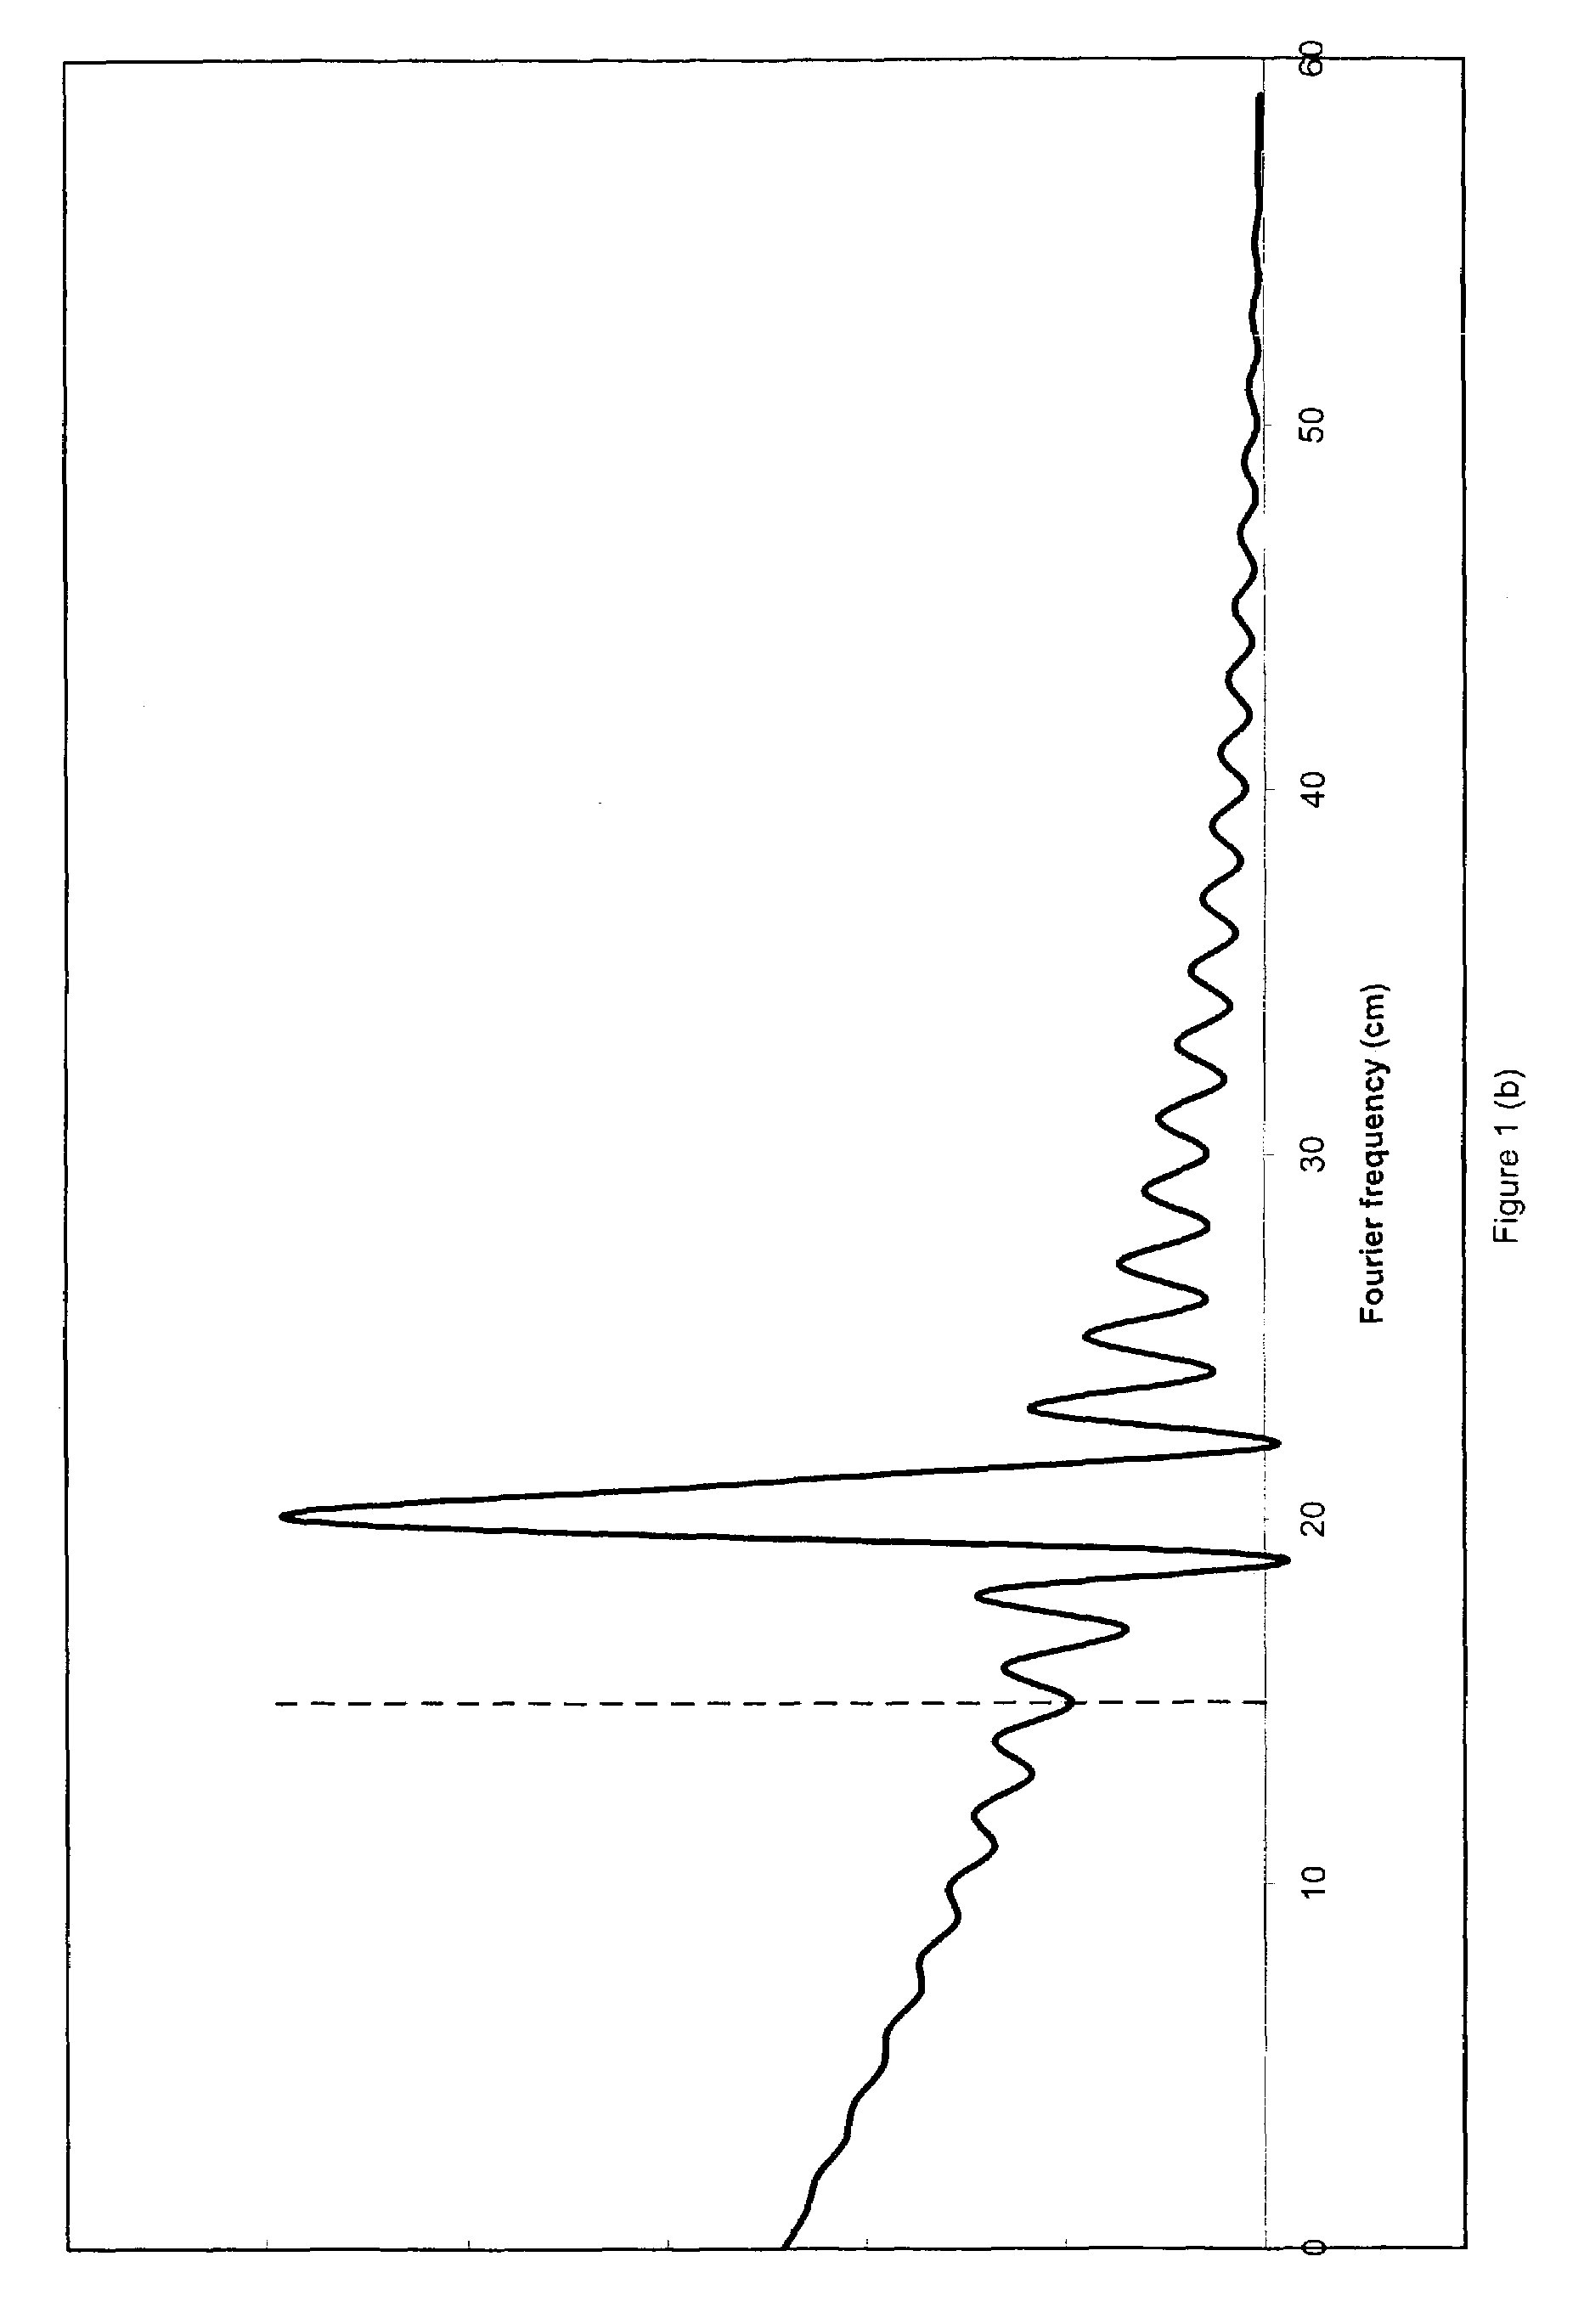 Envelope functions for modulation spectroscopy